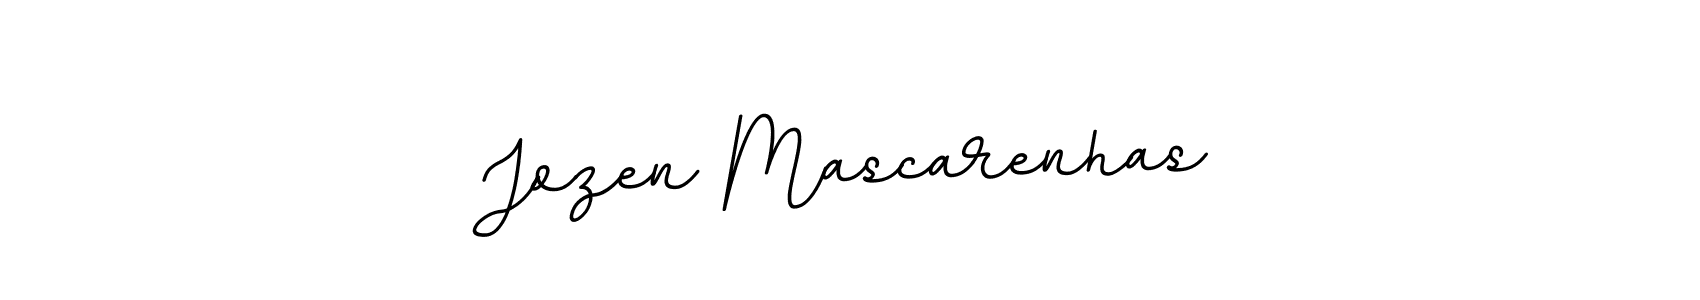 How to Draw Jozen Mascarenhas signature style? BallpointsItalic-DORy9 is a latest design signature styles for name Jozen Mascarenhas. Jozen Mascarenhas signature style 11 images and pictures png